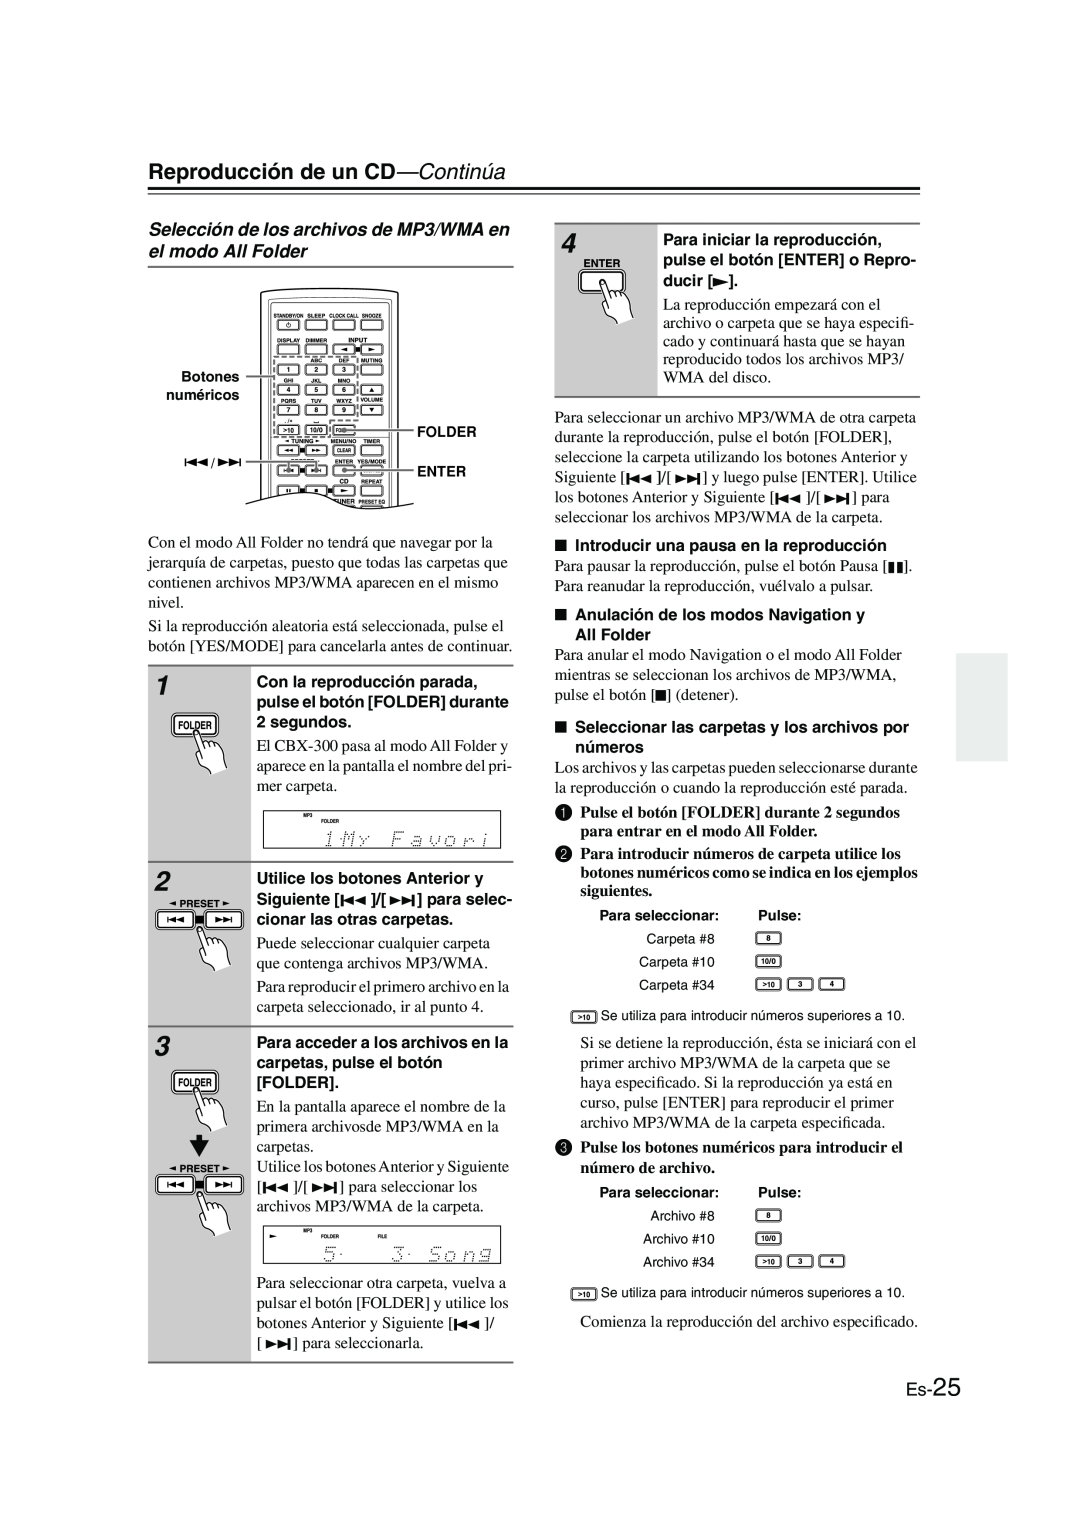 Onkyo CBX-300 instruction manual Es-25, Reproducción de un CD—Continúa 